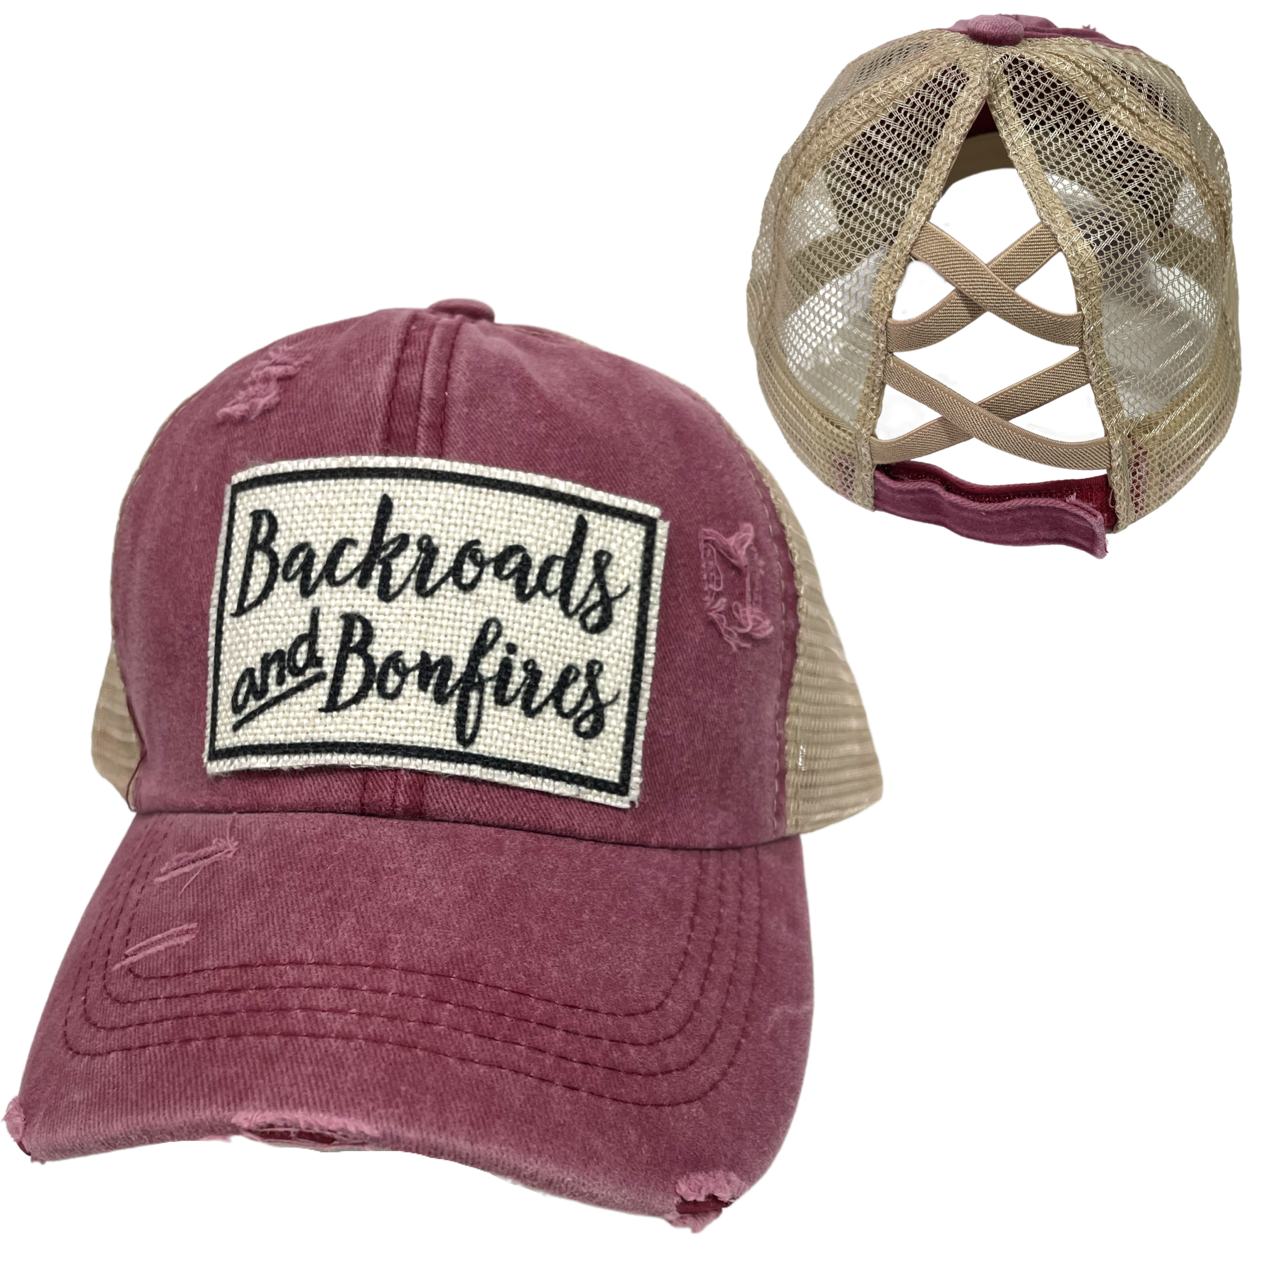 BACKROADS AND BONFIRES CRISS-CROSS PONYTAIL HAT